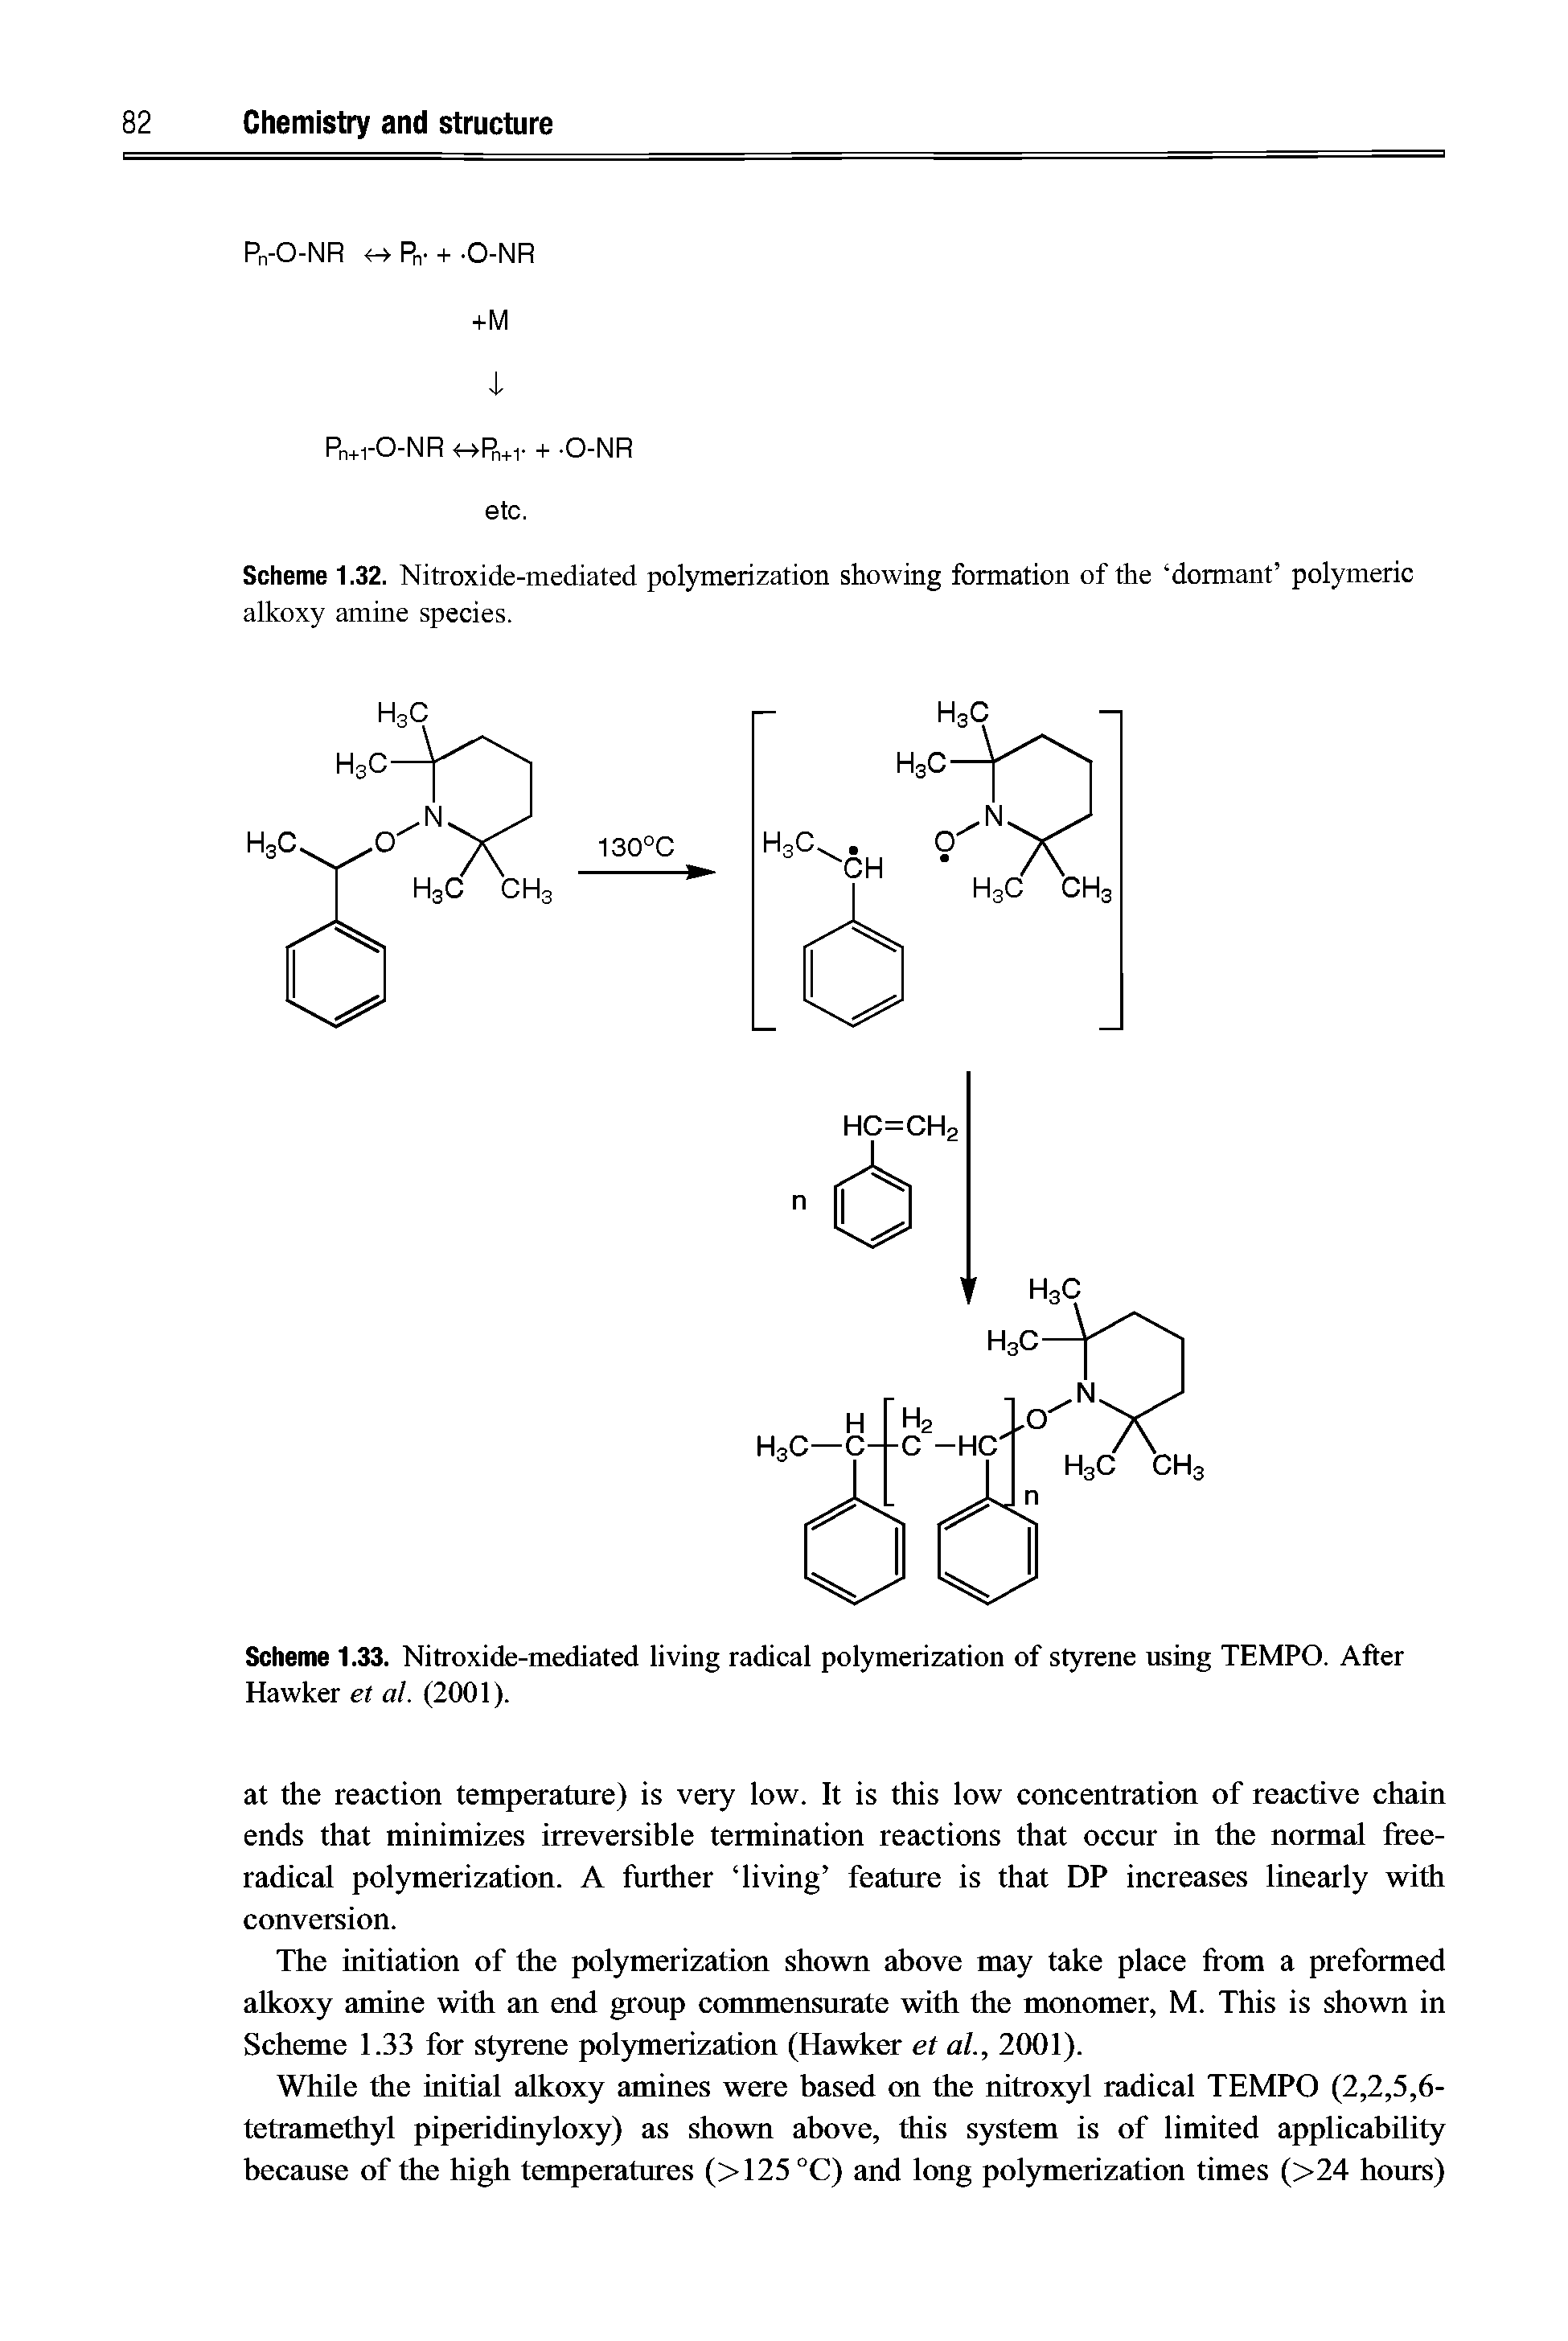 Scheme 1.32. Nitroxide-mediated polymerization showing formation of the dormant polymeric alkoxy amine species.